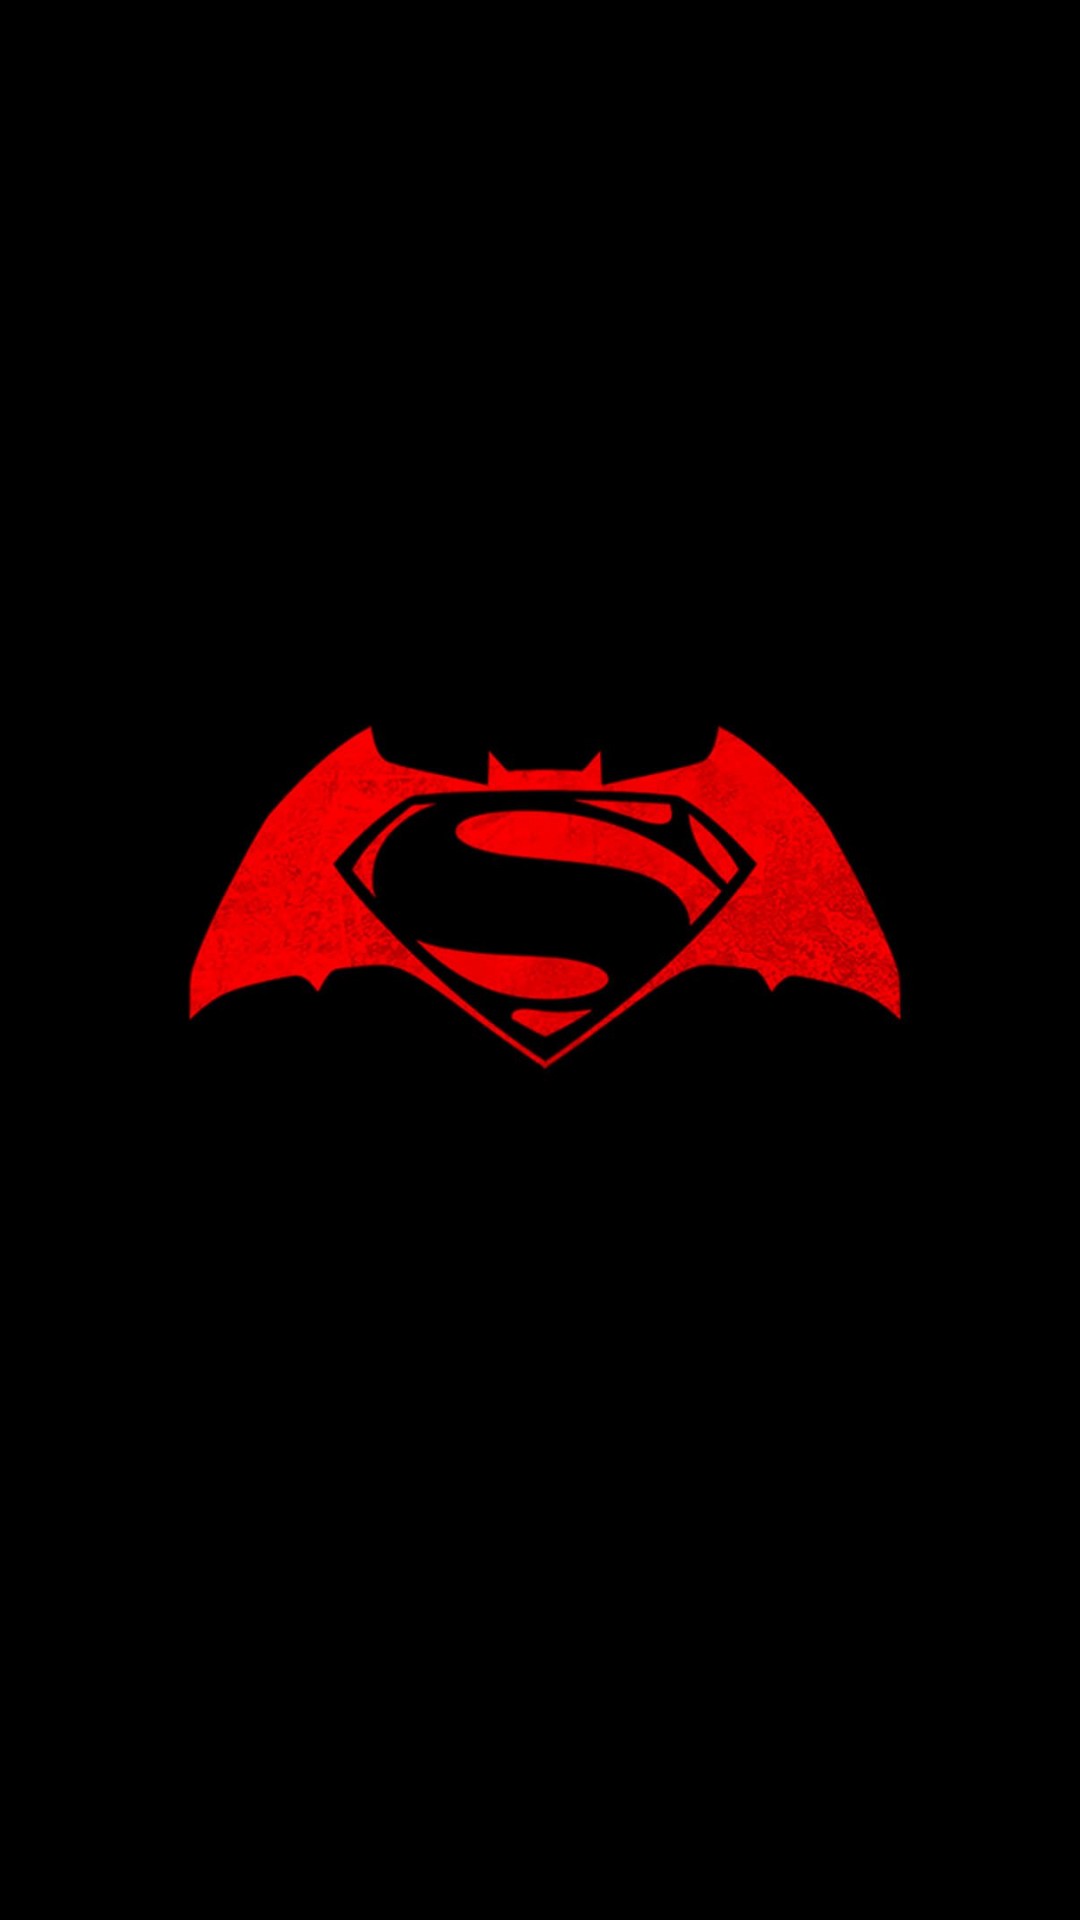 Batman v Superman logo Wallpaper for Google Nexus 5X